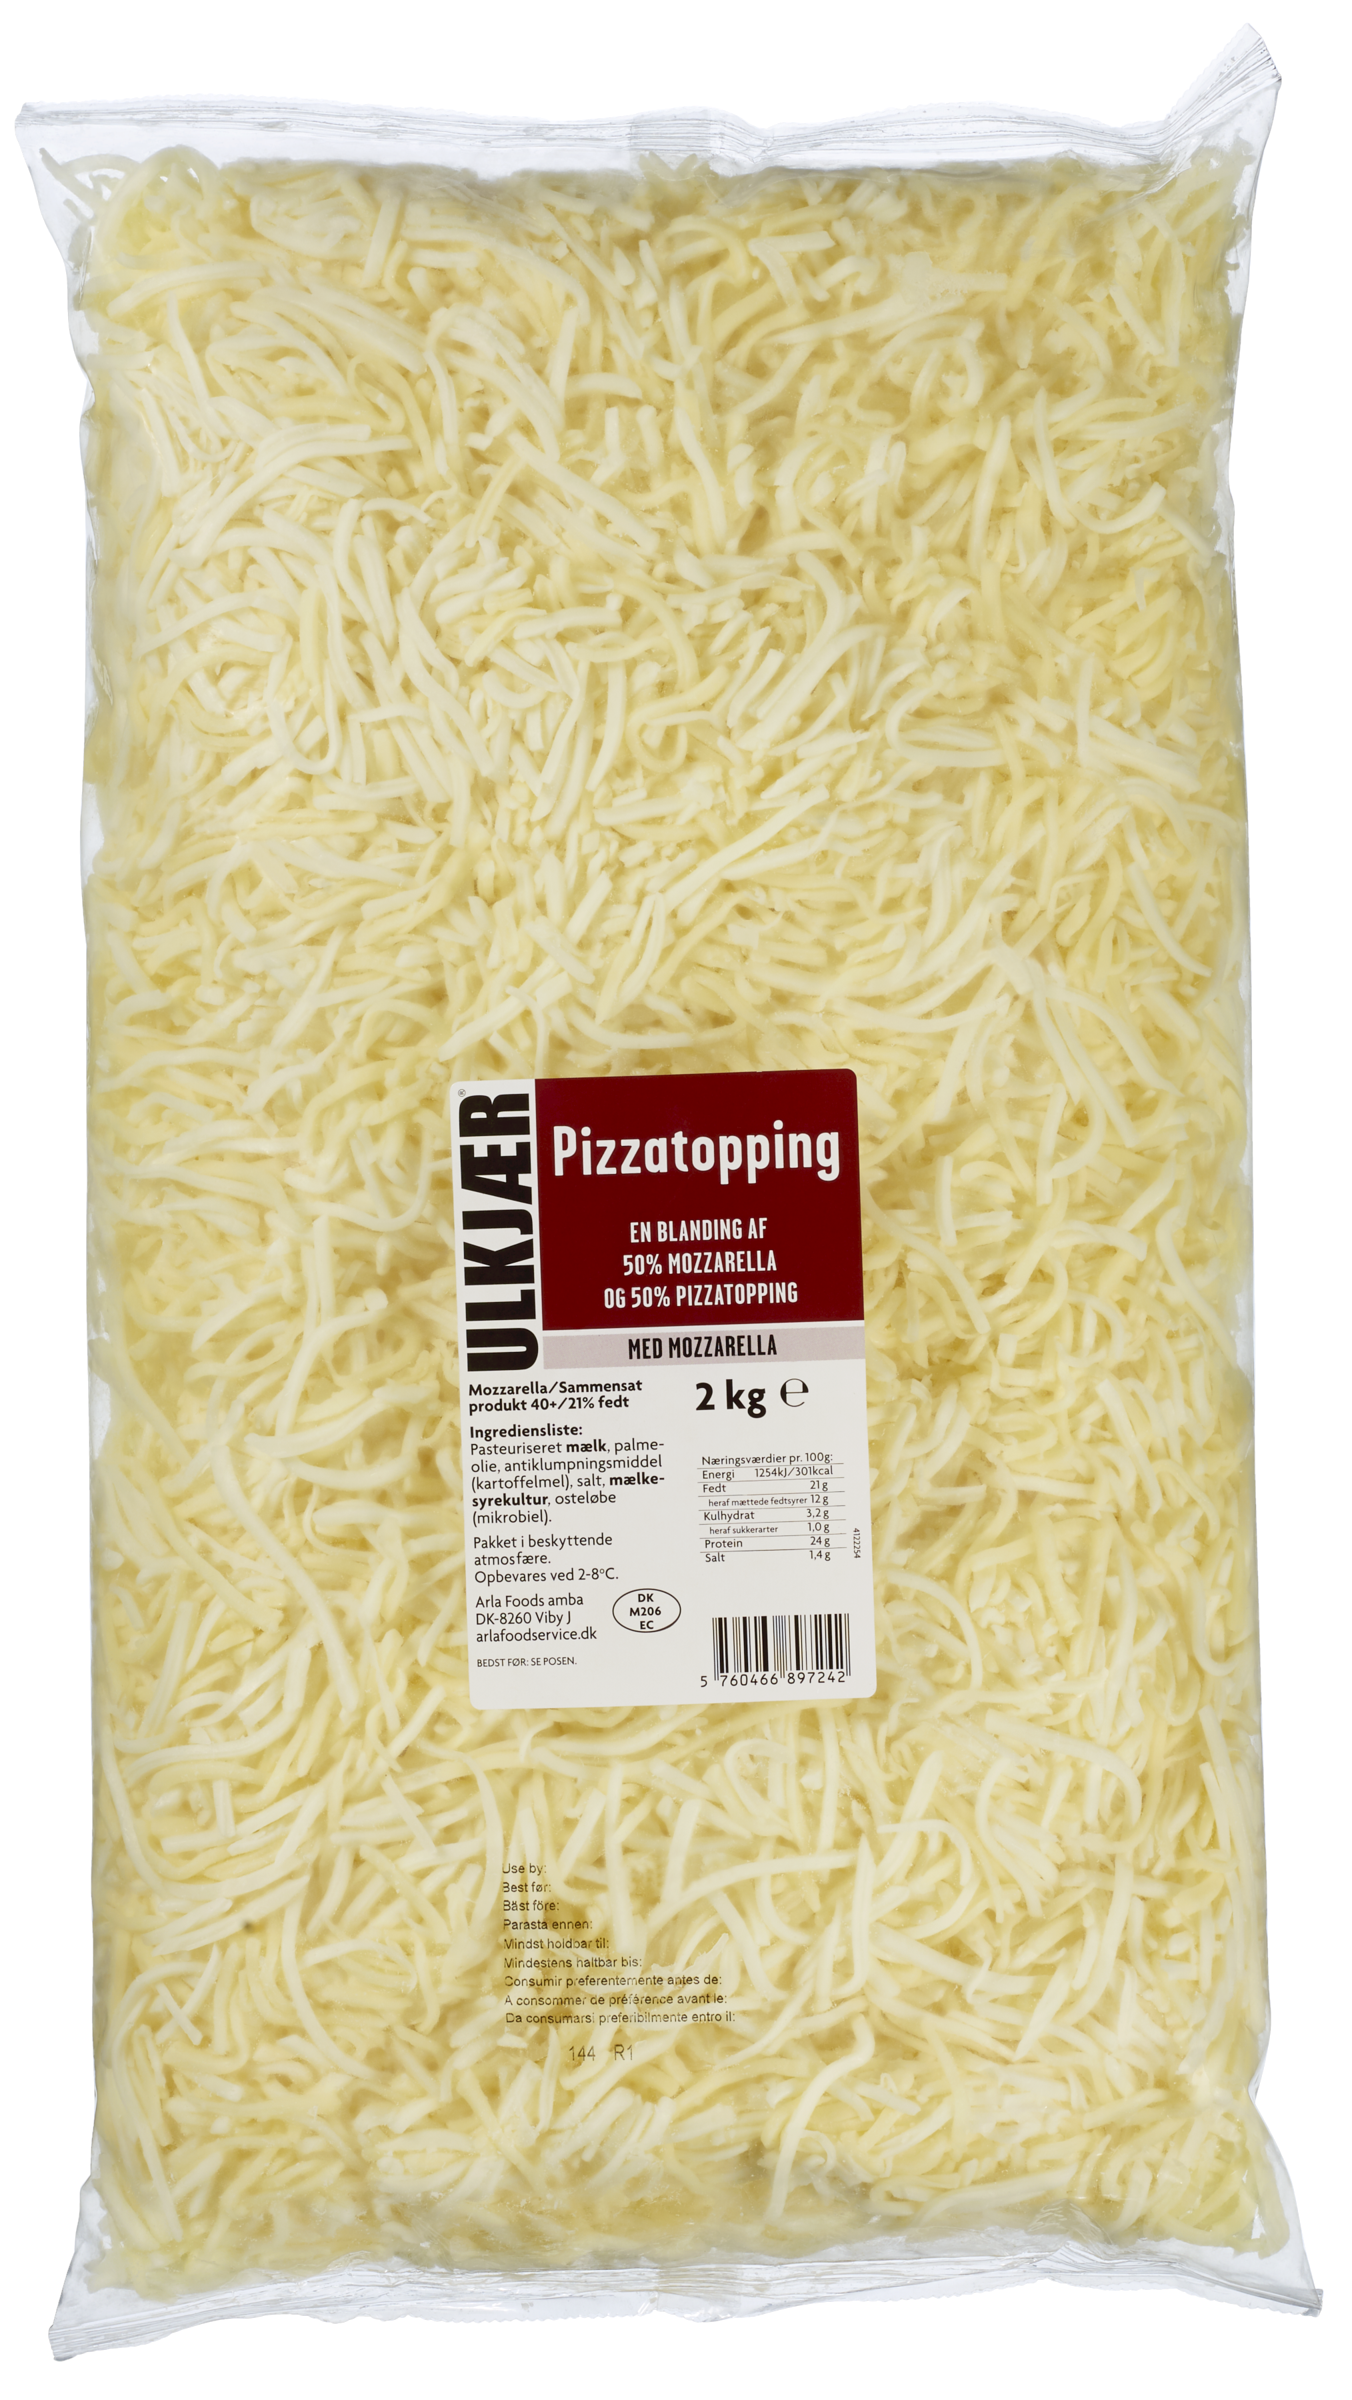 Arla Pro Ulkjær Pizzatopping med Mozzarella 2 kg